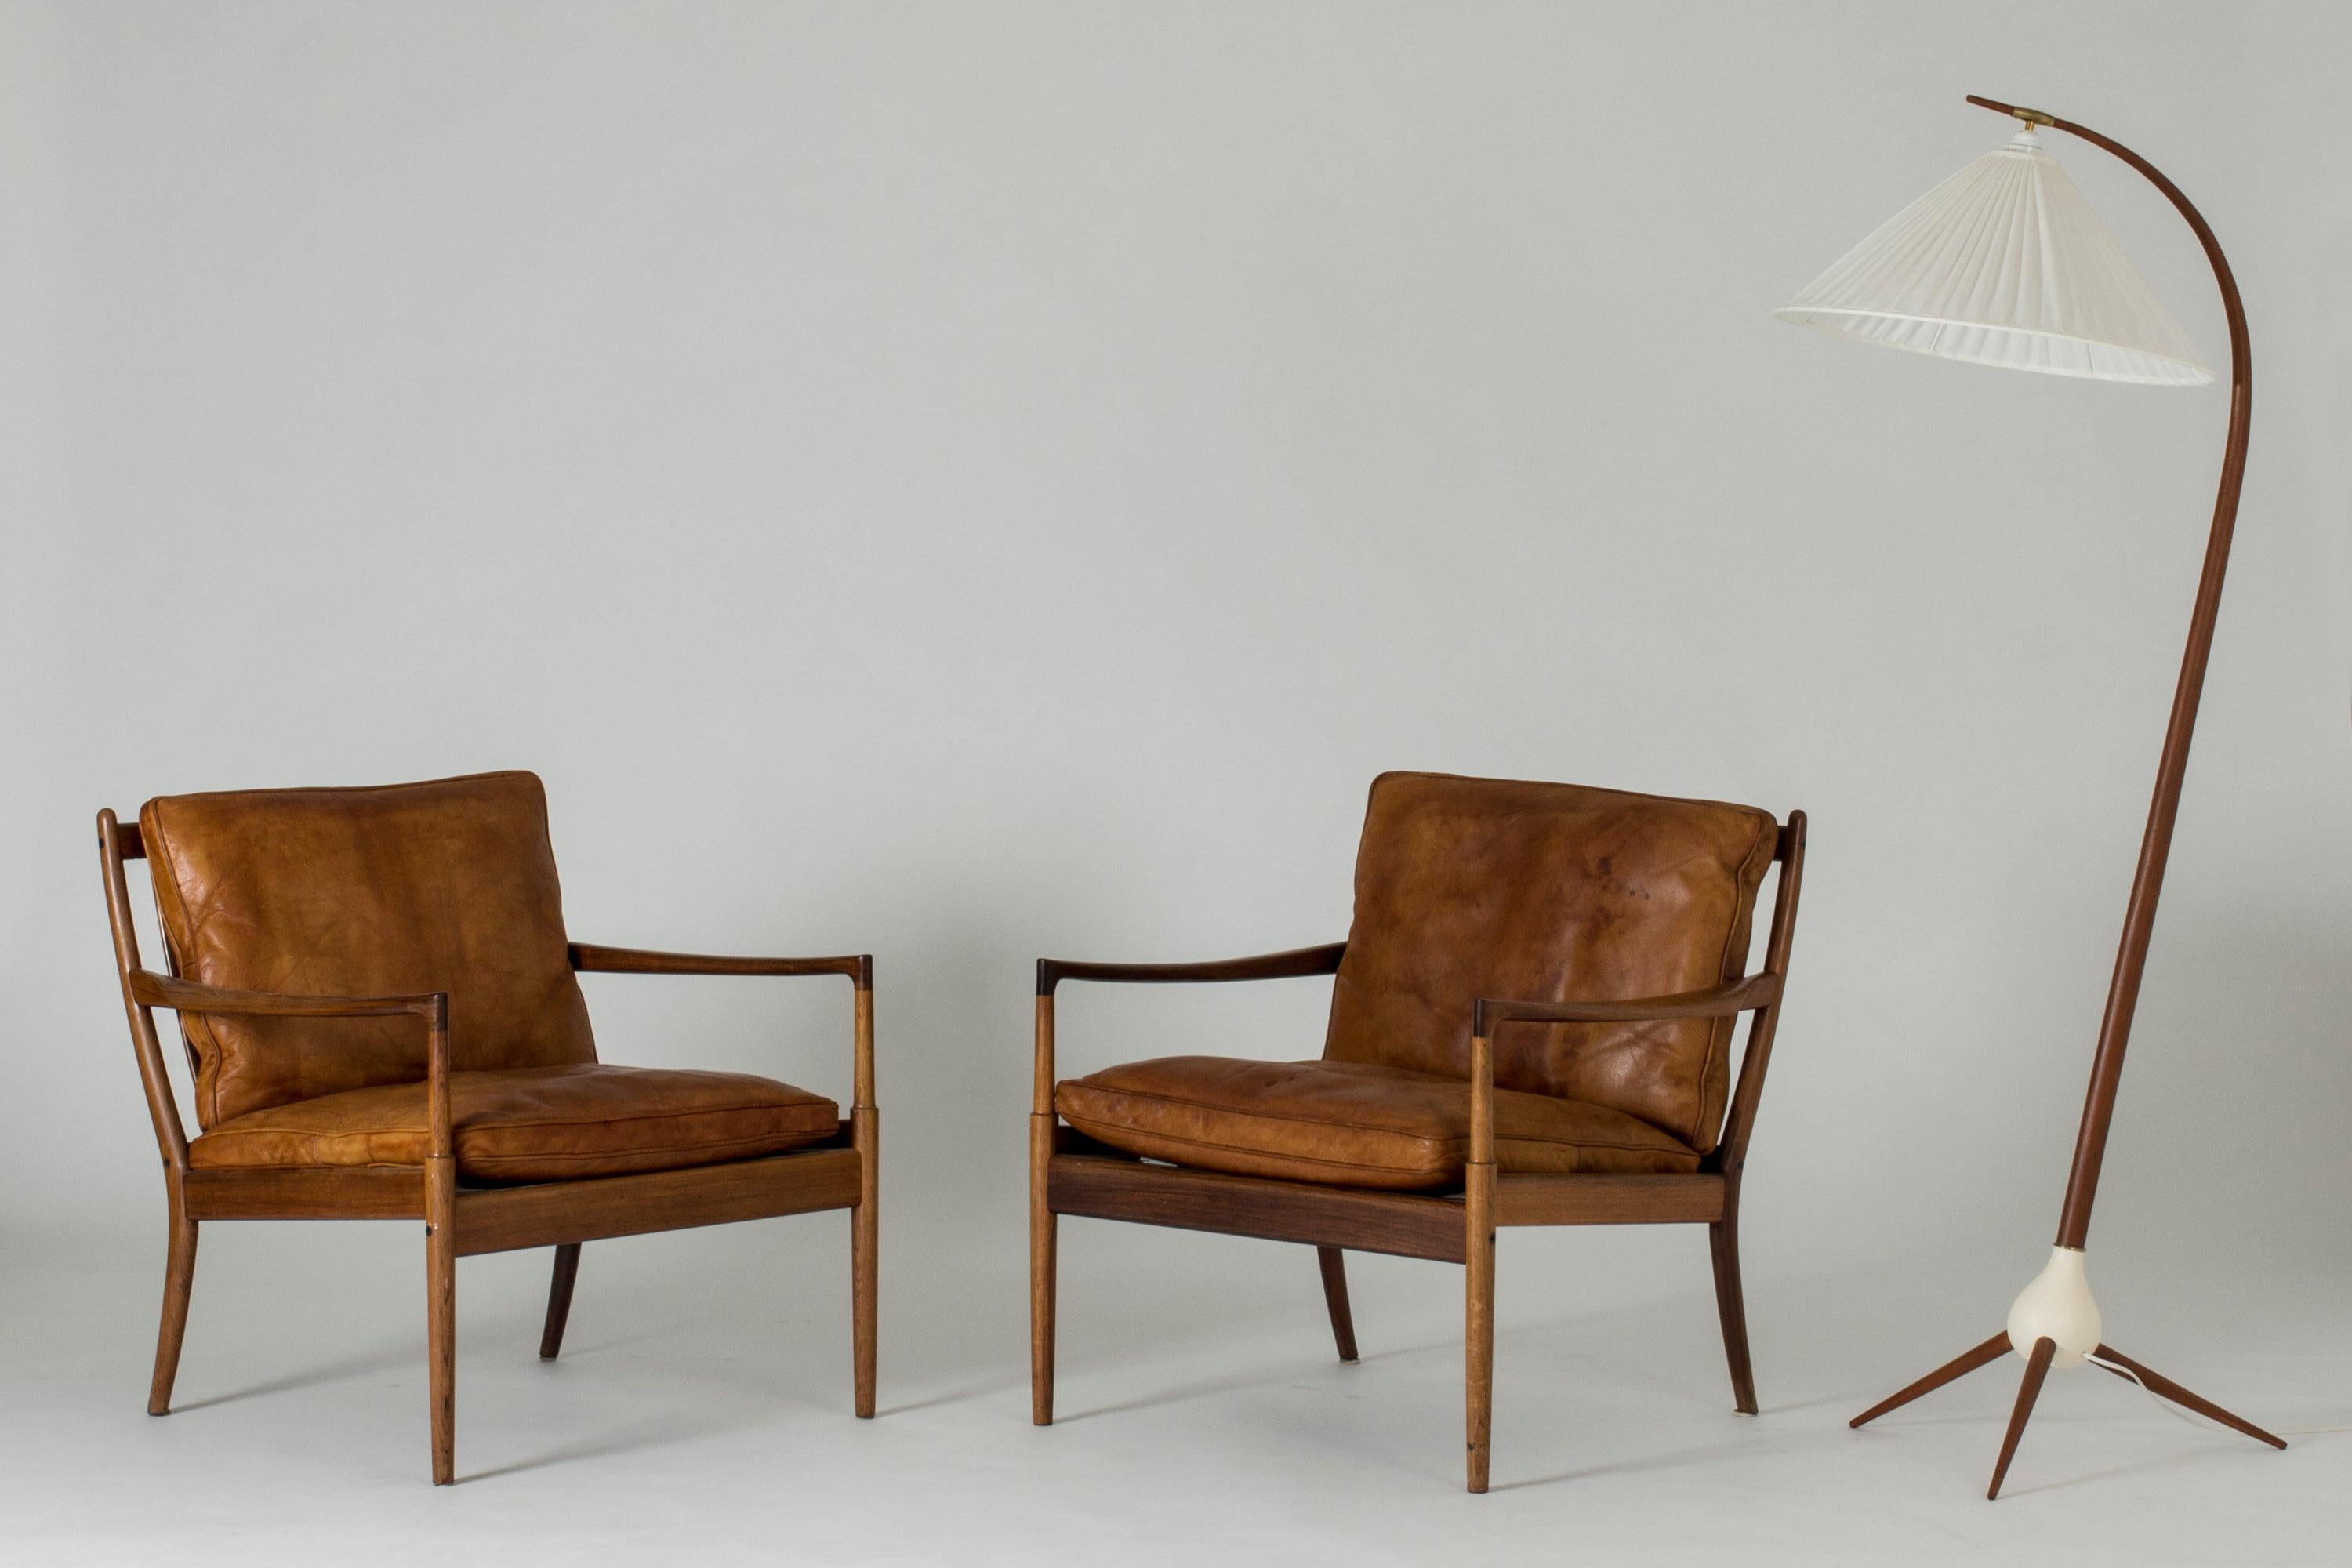 Swedish Pair of Rosewood and Leather “Samsö” Lounge Chairs by Ib Kofod Larsen